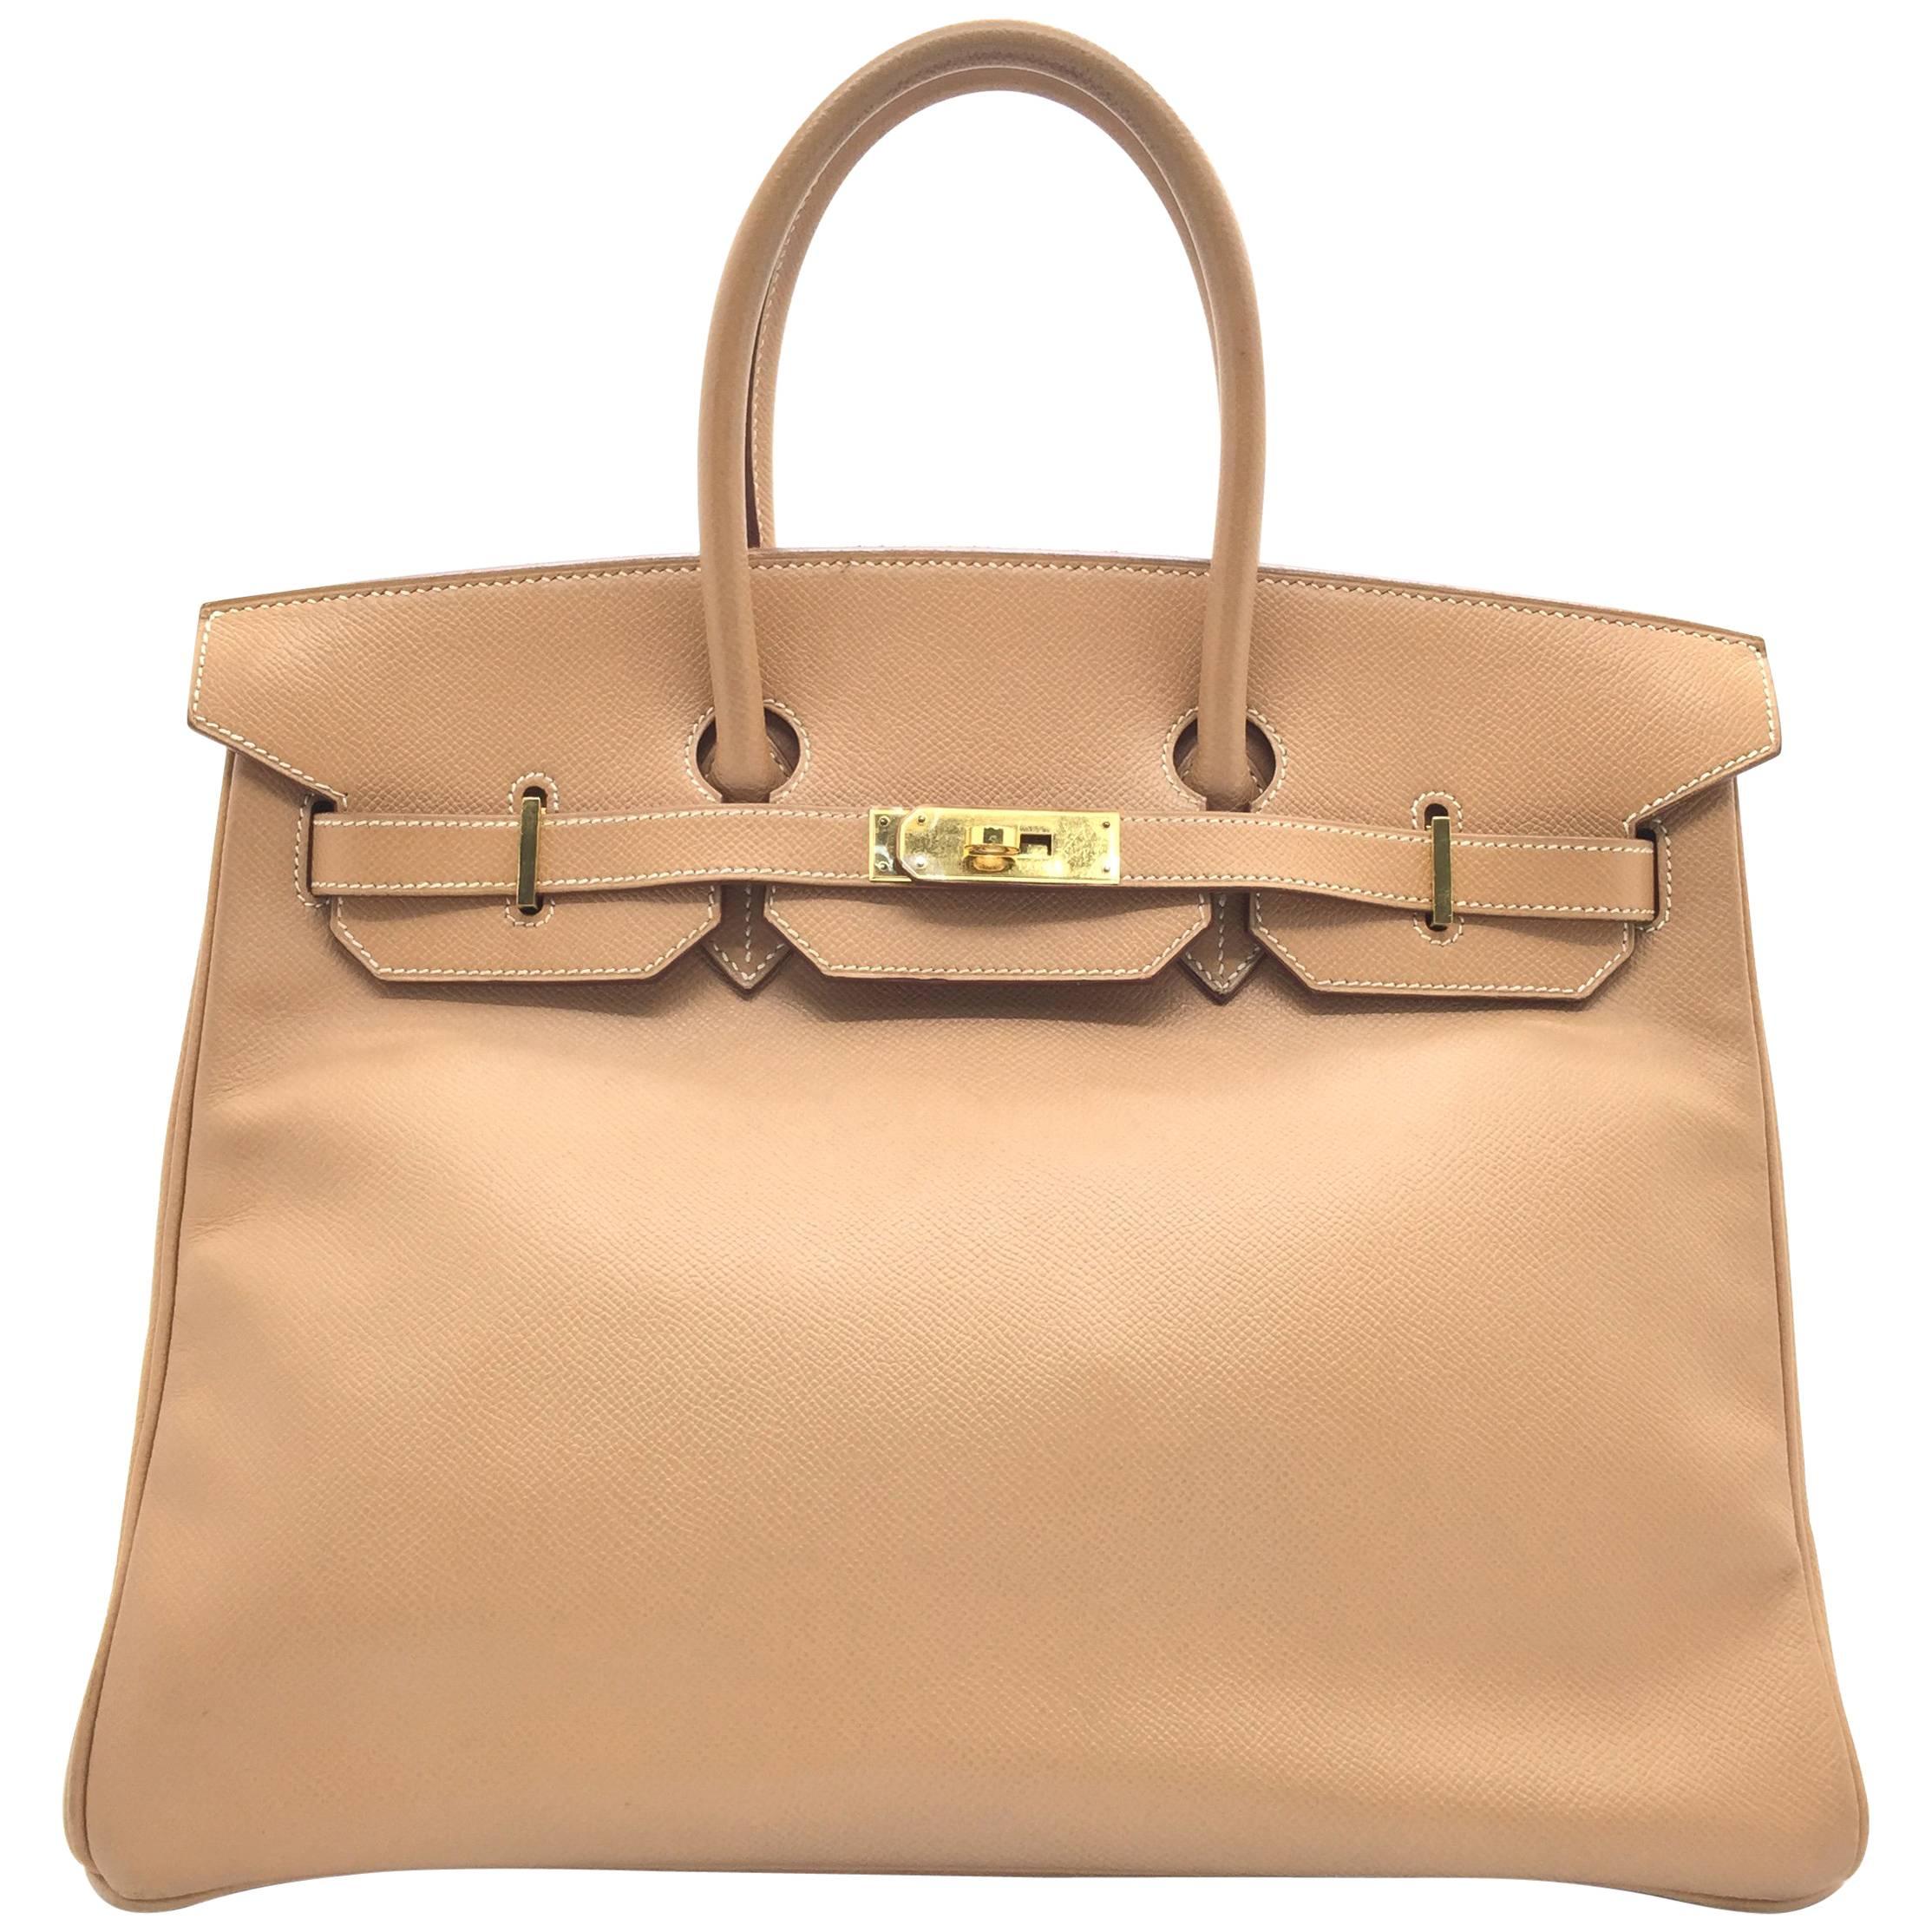 Hermes Birkin 35 Tabac Camel VGC Leather GHW Top Handle Bag